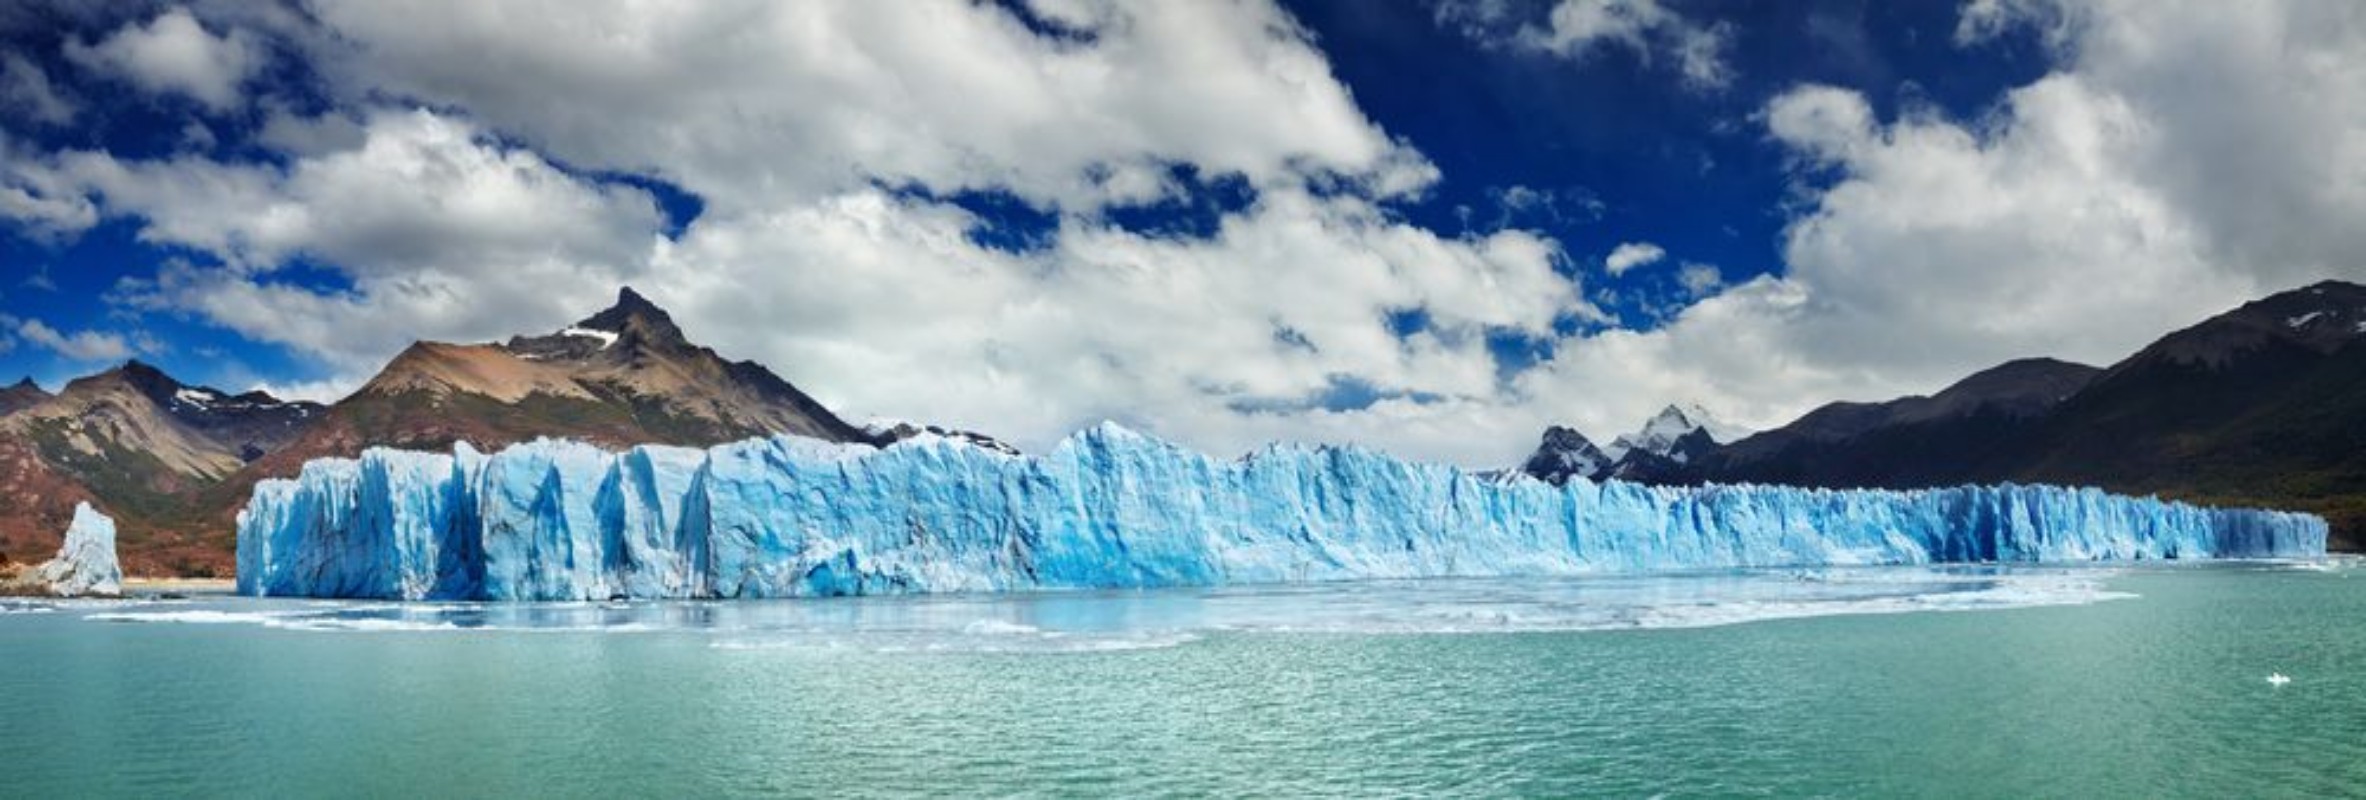 Image de Perito Moreno Glacier